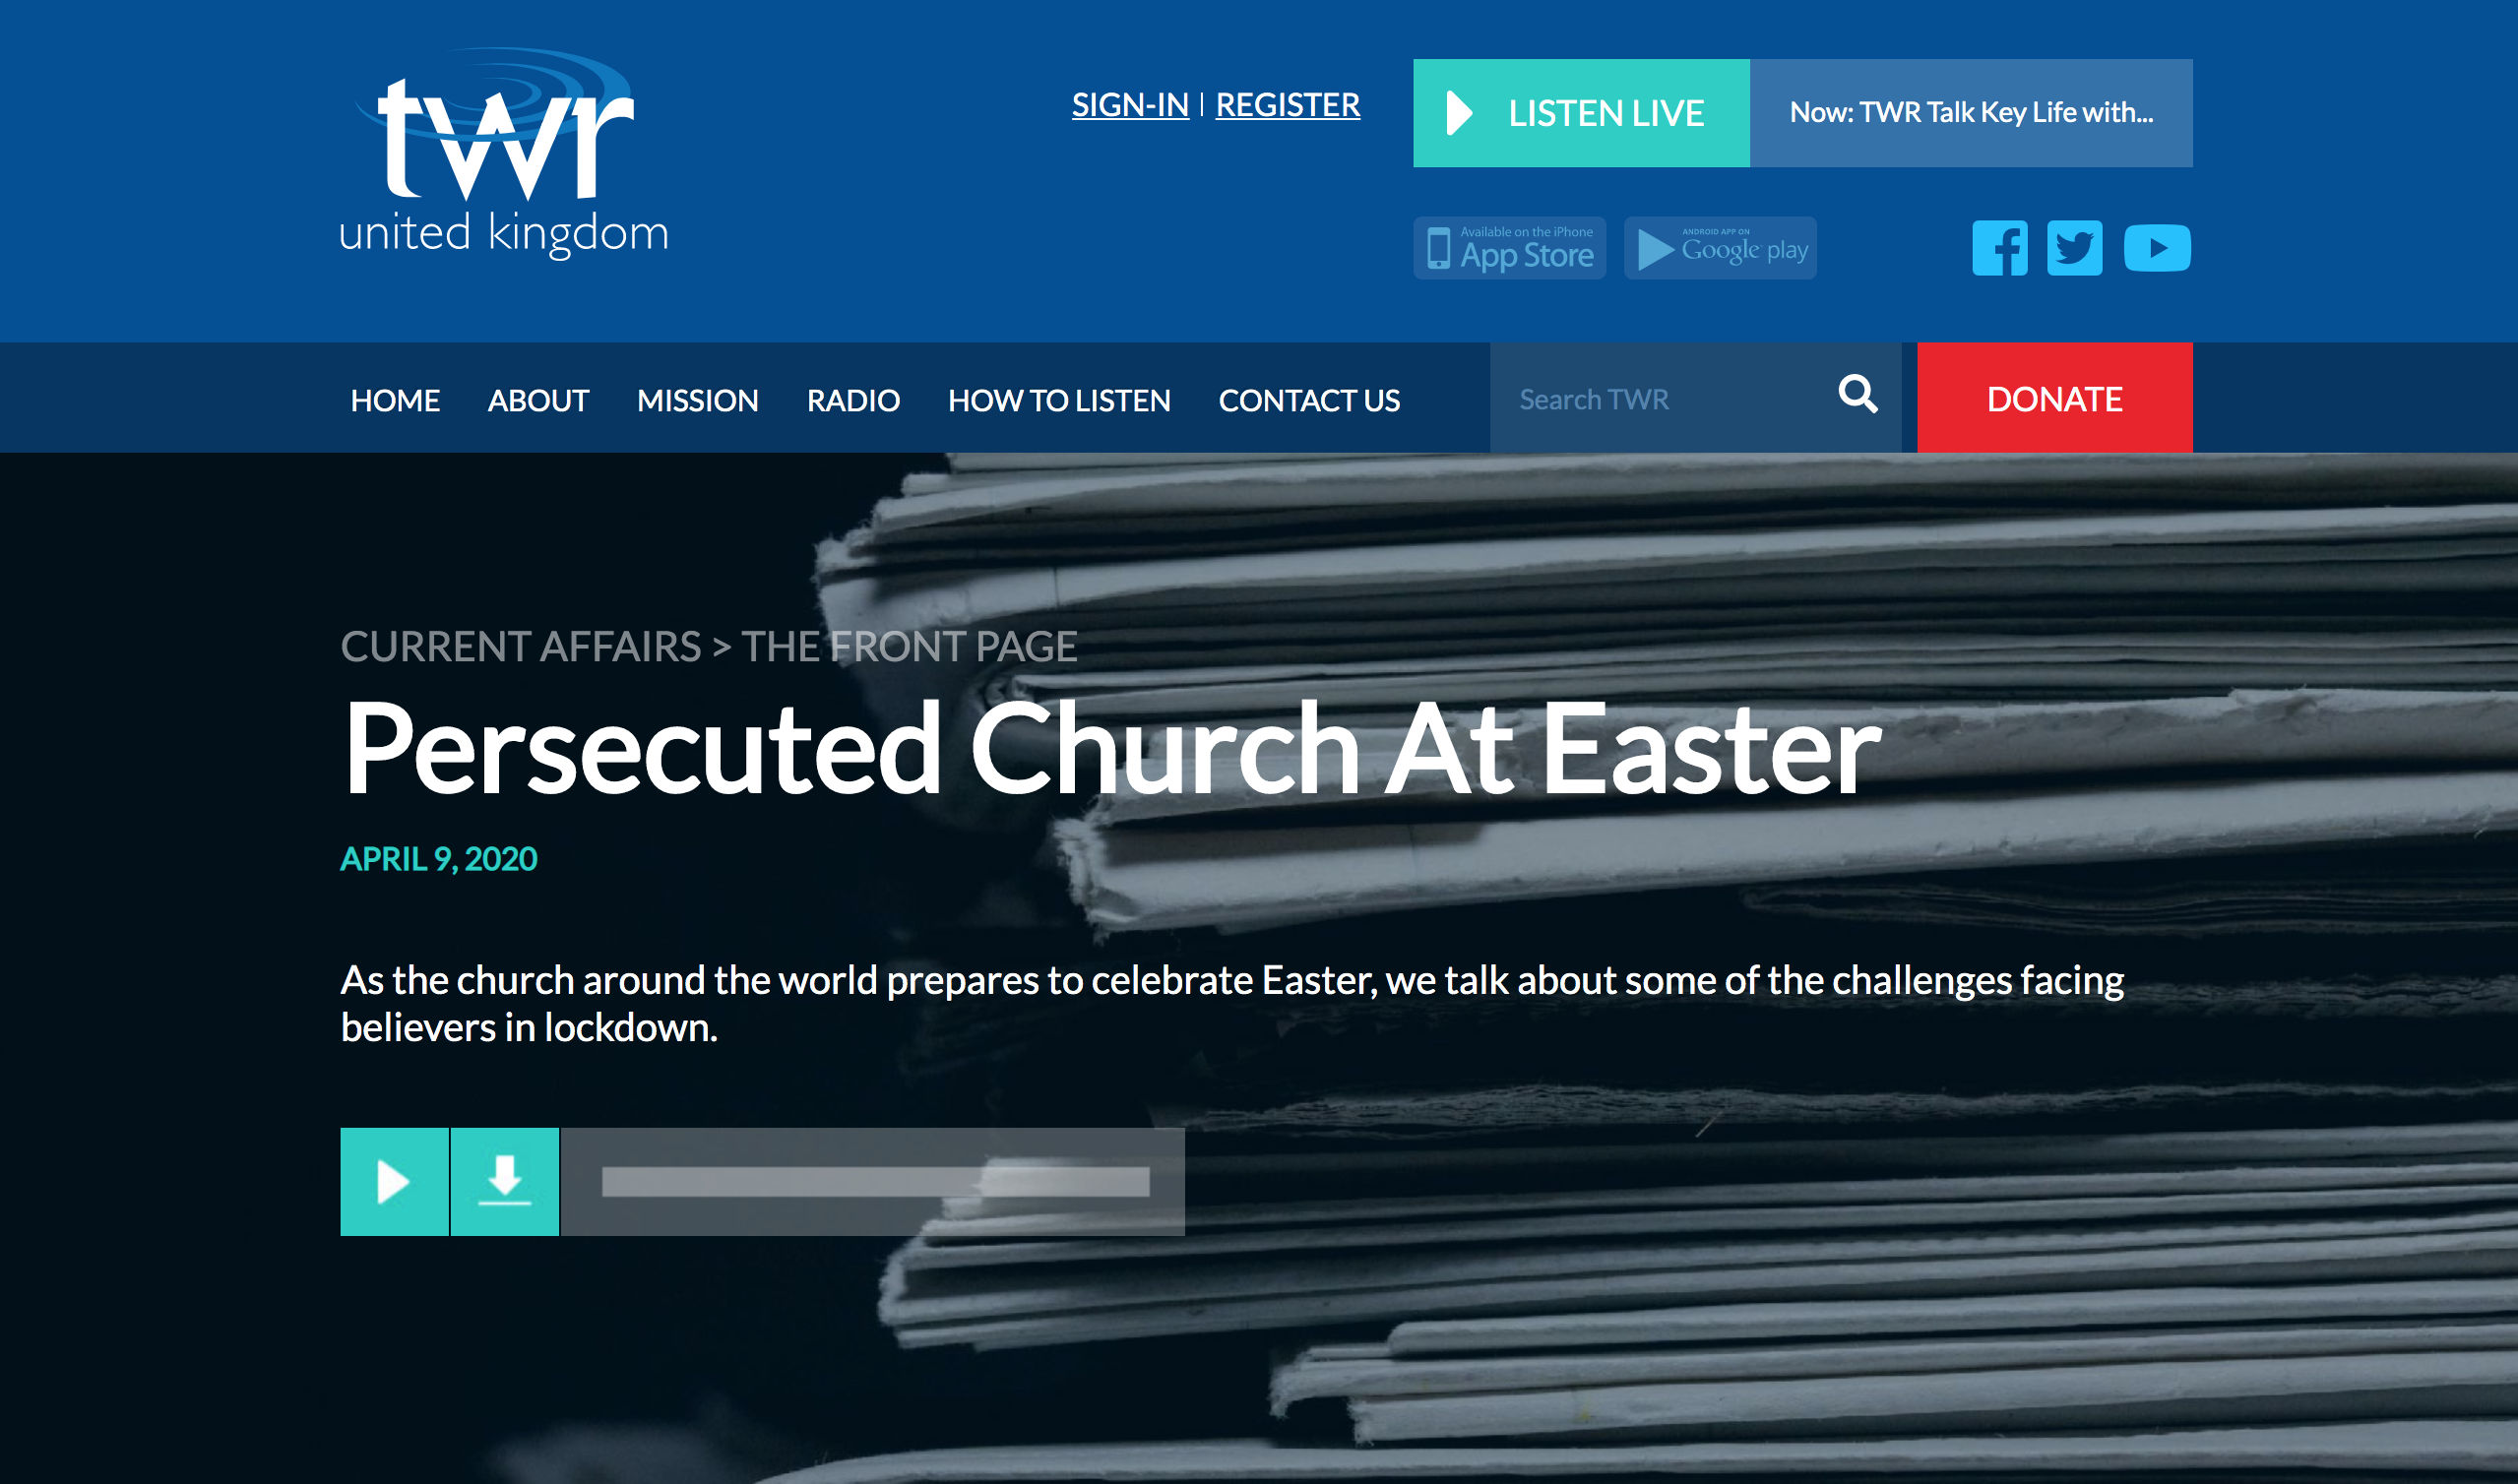 TWR persecuted church under lockdown